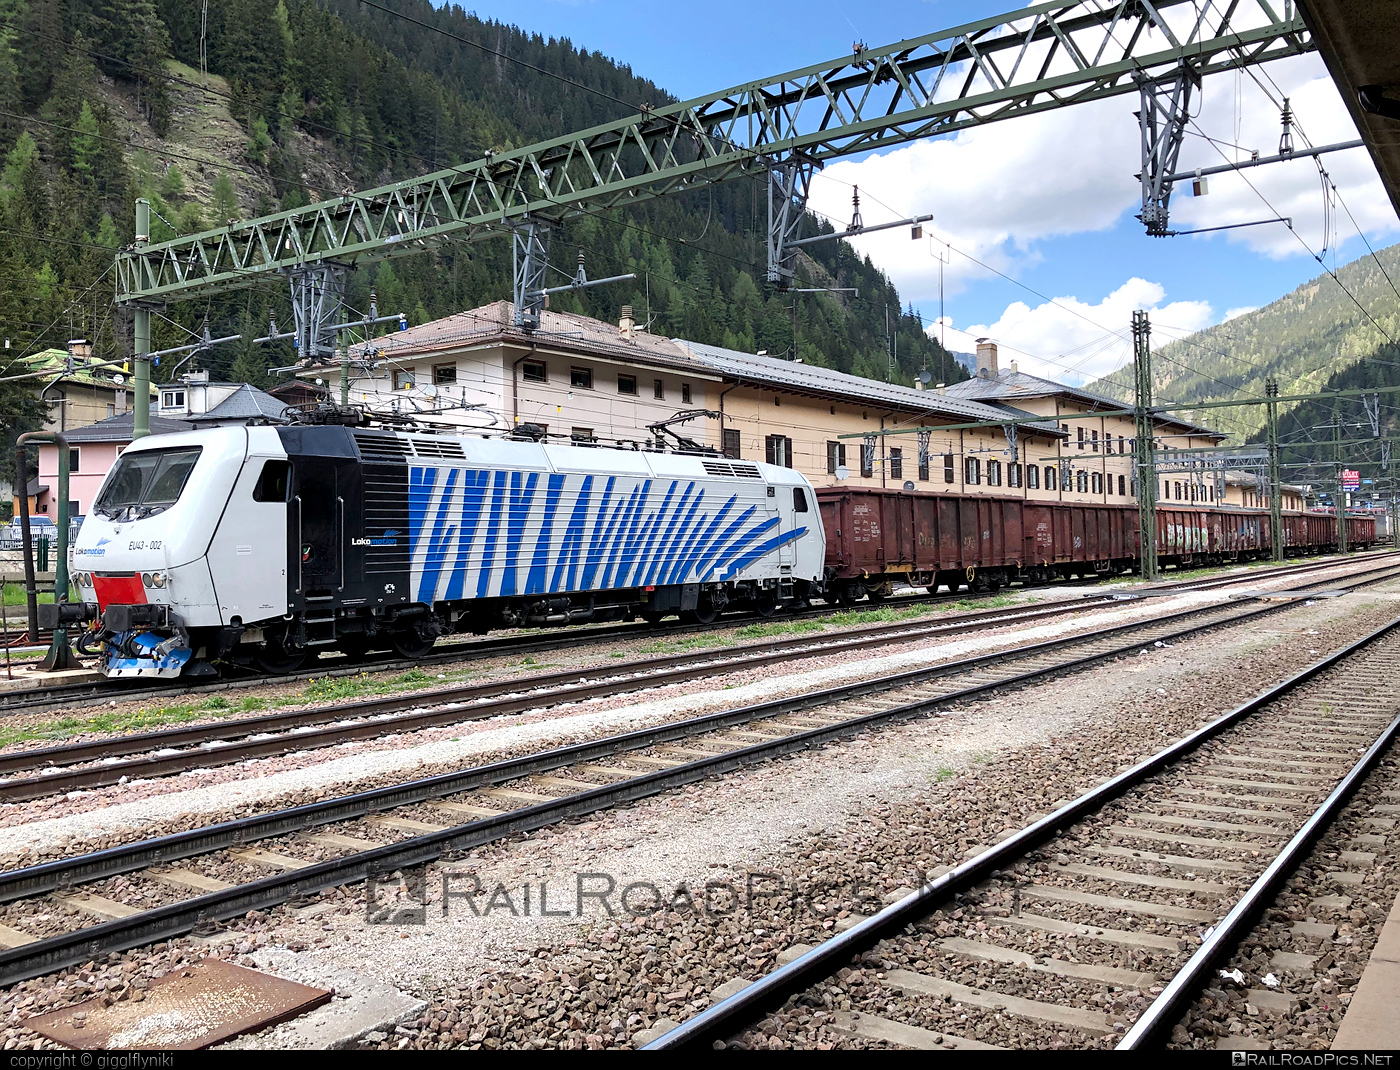 FS Class E.412 - EU43-002 operated by Lokomotion Gesellschaft für Schienentraktion mbH #LokomotionGesellschaftFurSchienentraktion #RailTractionCompany #e412 #fsClassE412 #lokomotion #openwagon #rtc